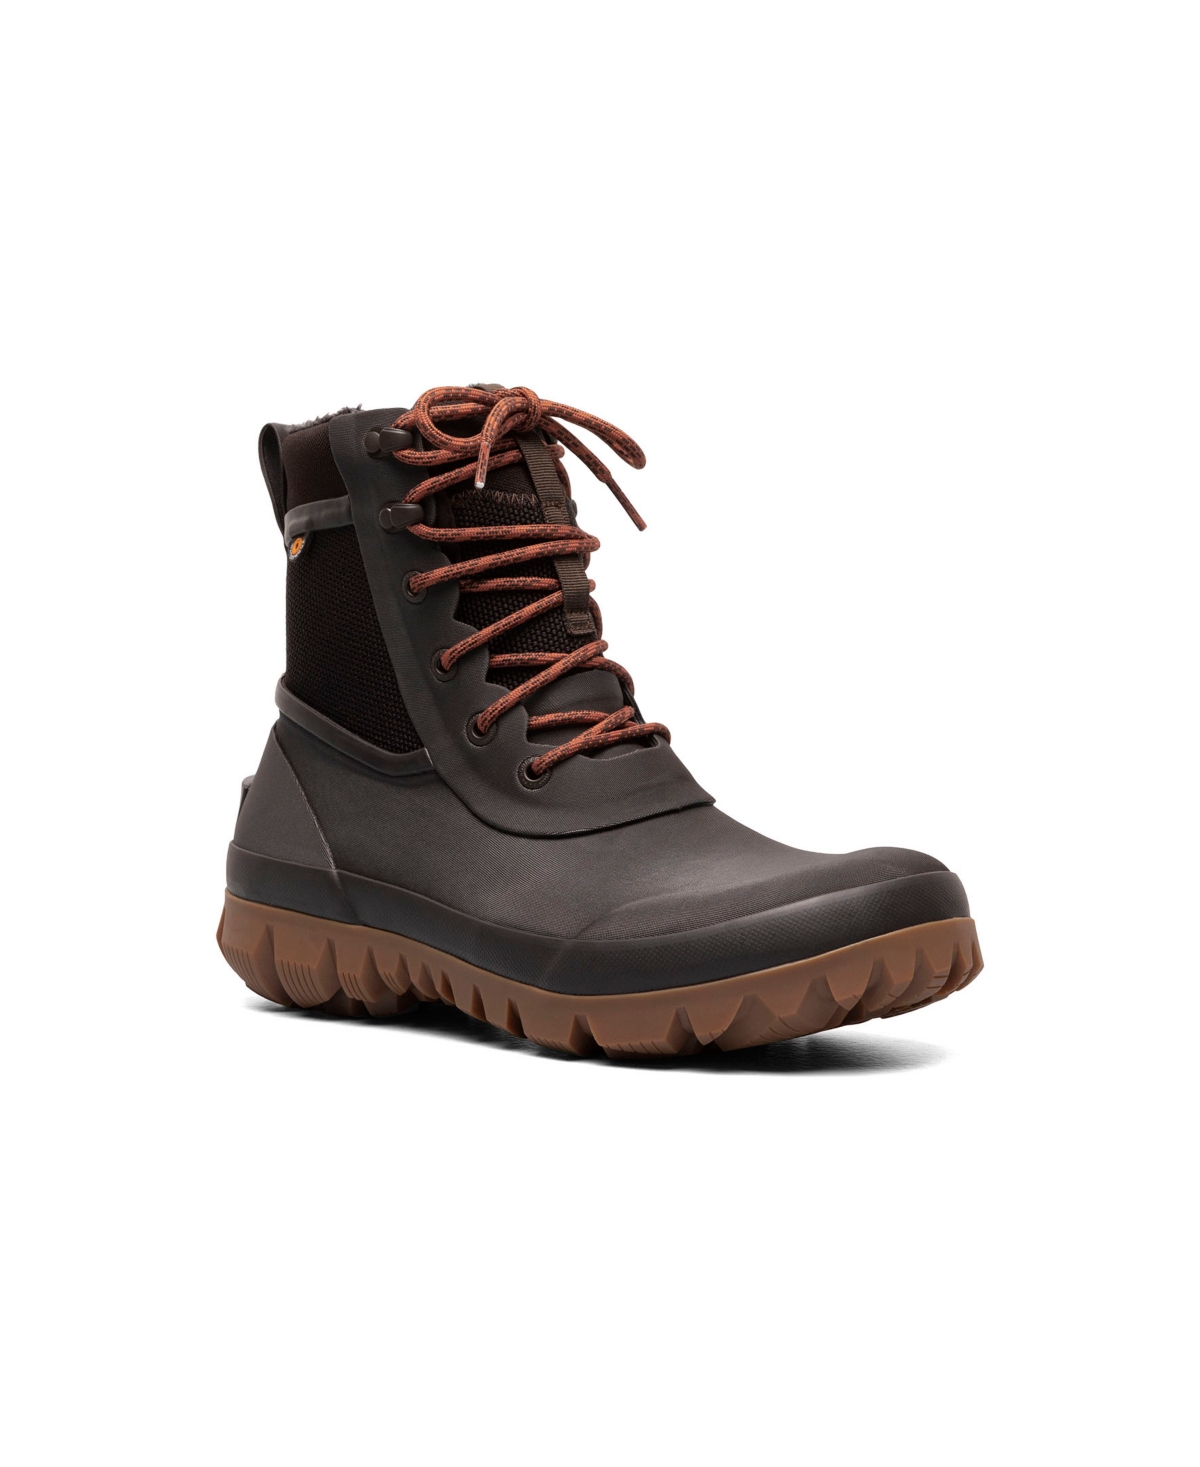 Men's Arcata Urban Slip-Resistant Lace Up Boot - Dark Brown